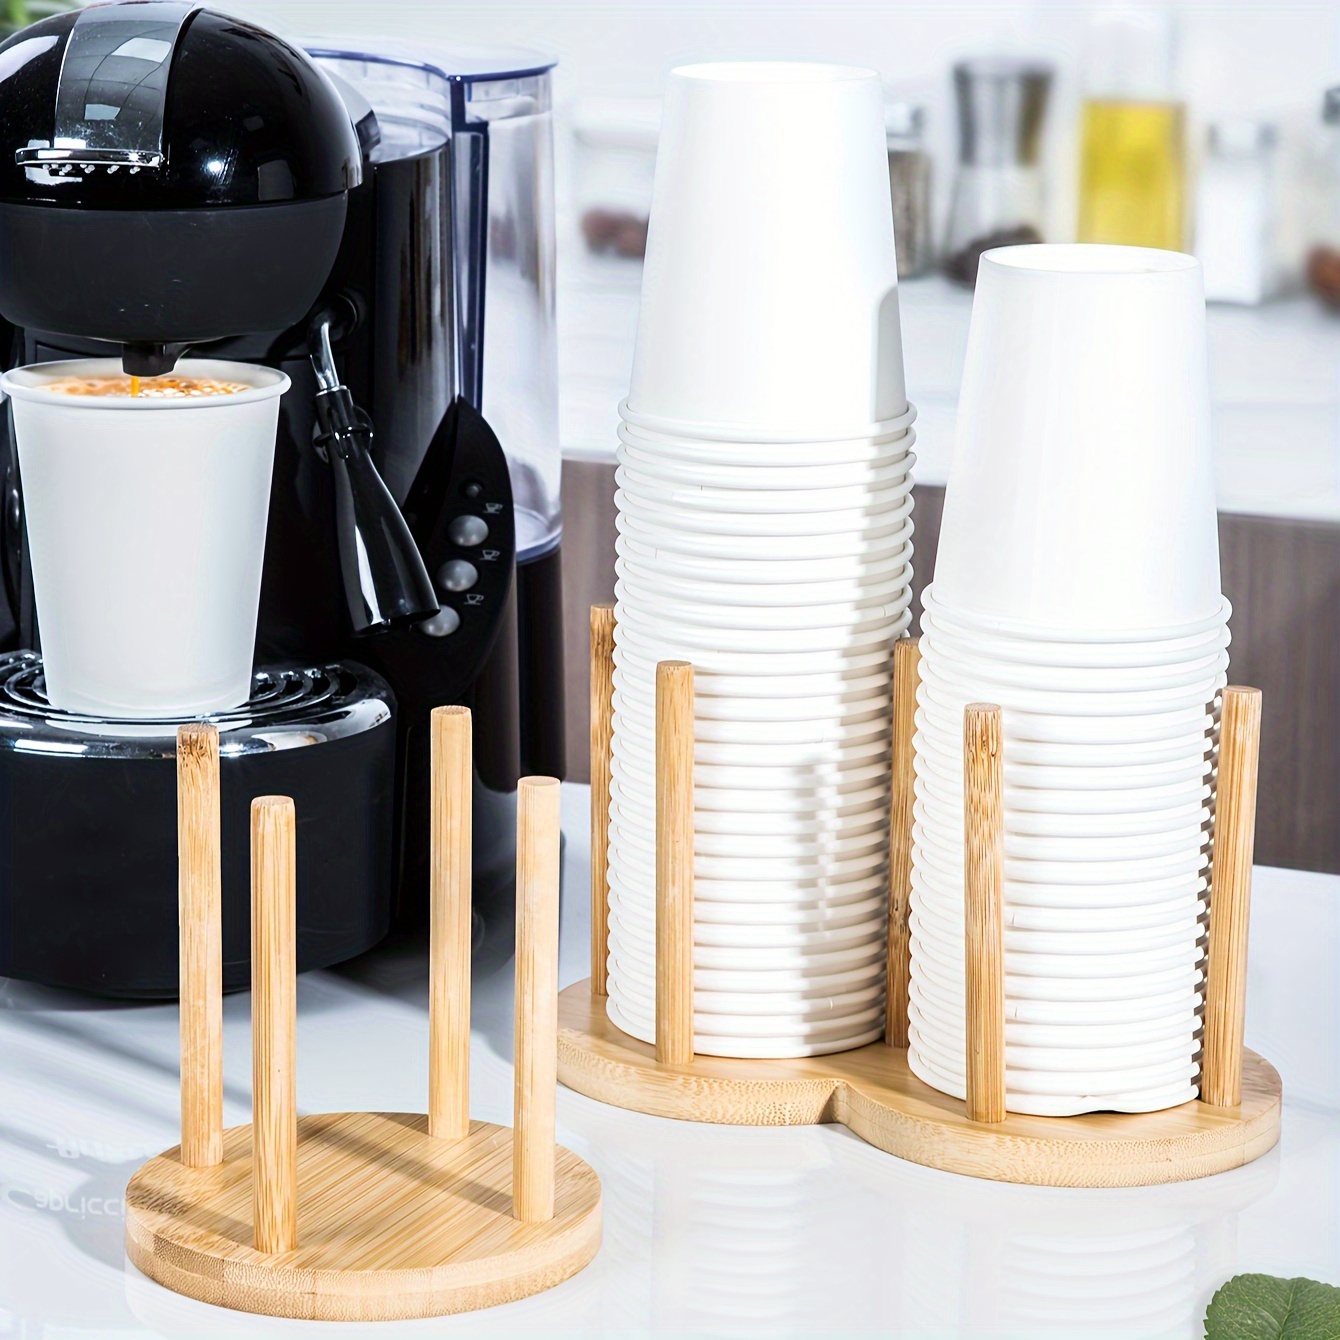 Anti-Spill Kaffee trinken Becher halter Computer-Schreibtisch